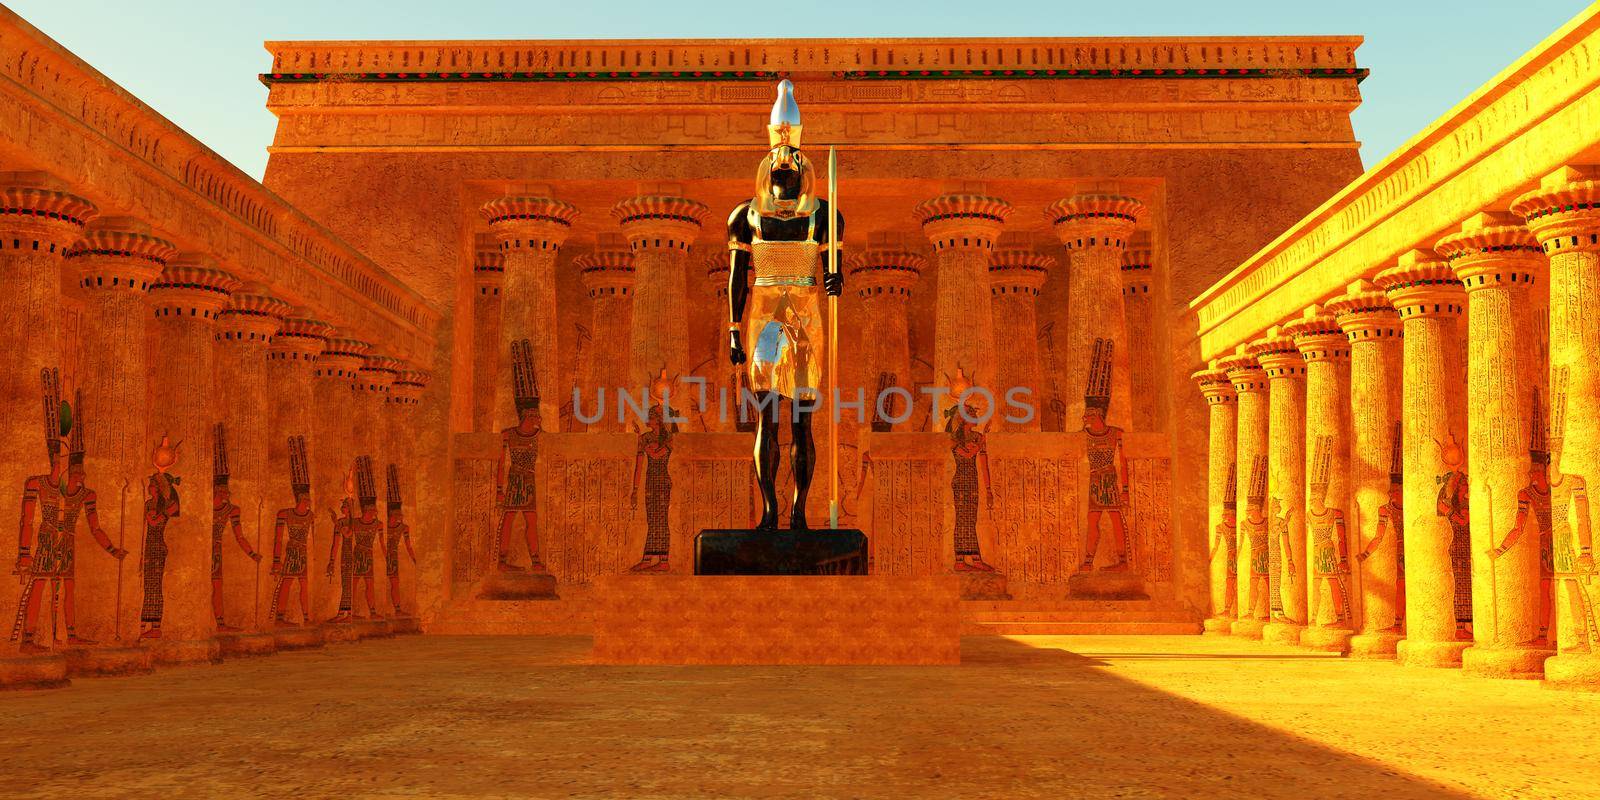 Temple of Horus by Catmando